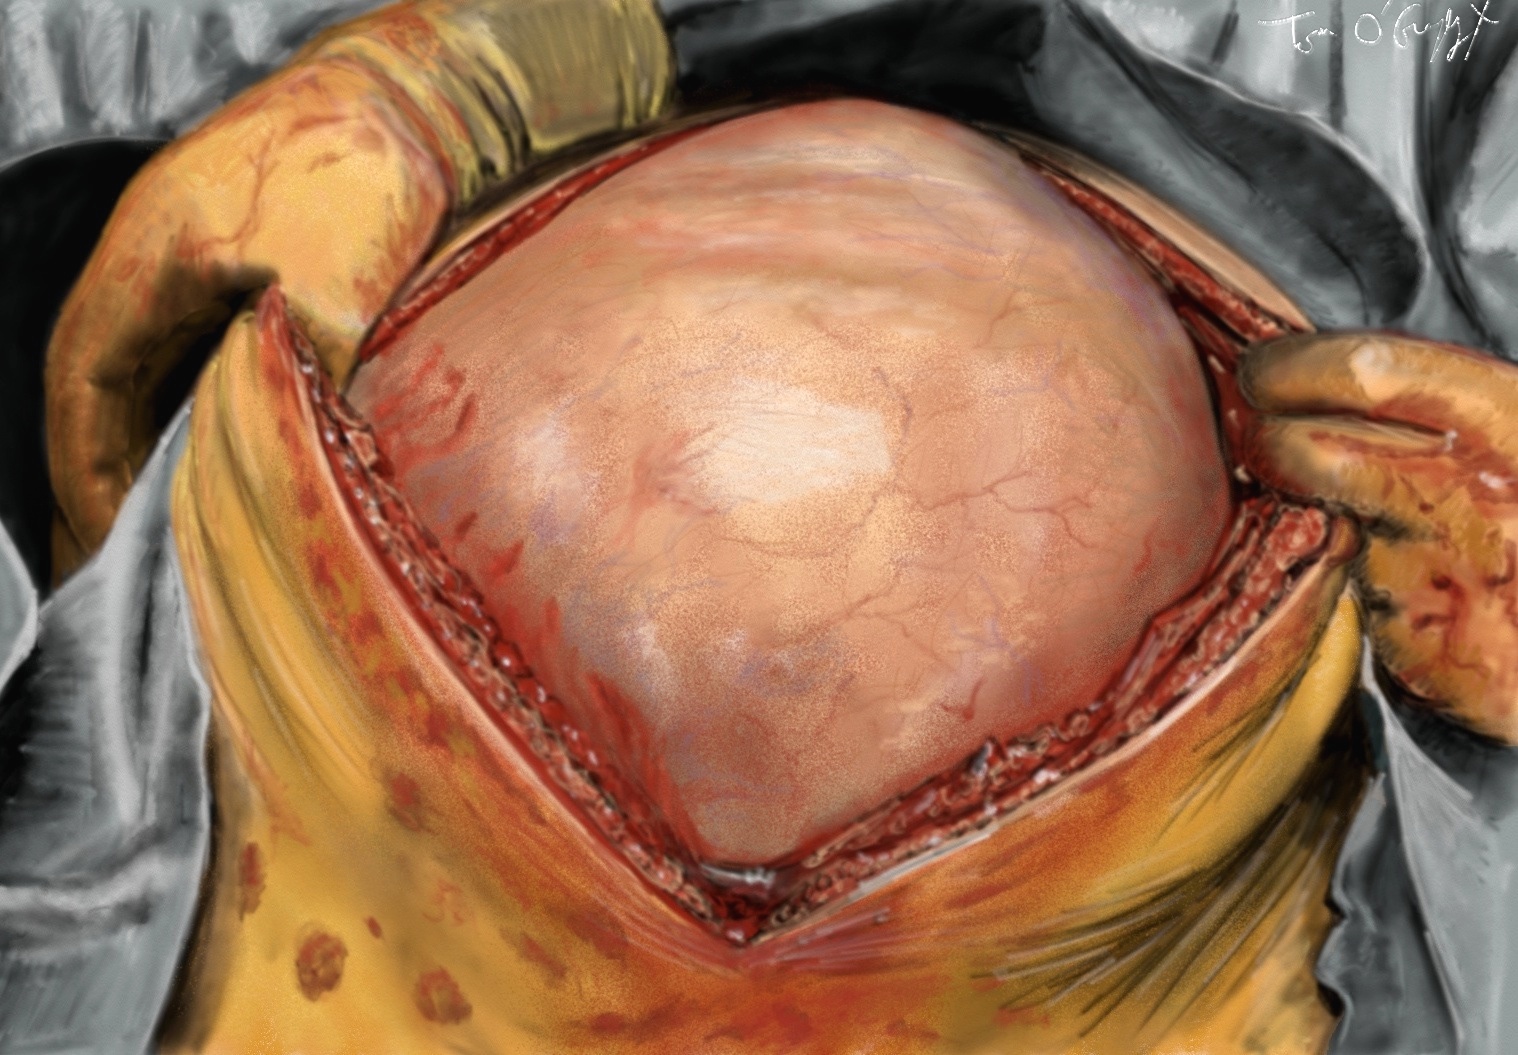 Kyste ovarien : hémorragie, rupture et compression | thoracotomie